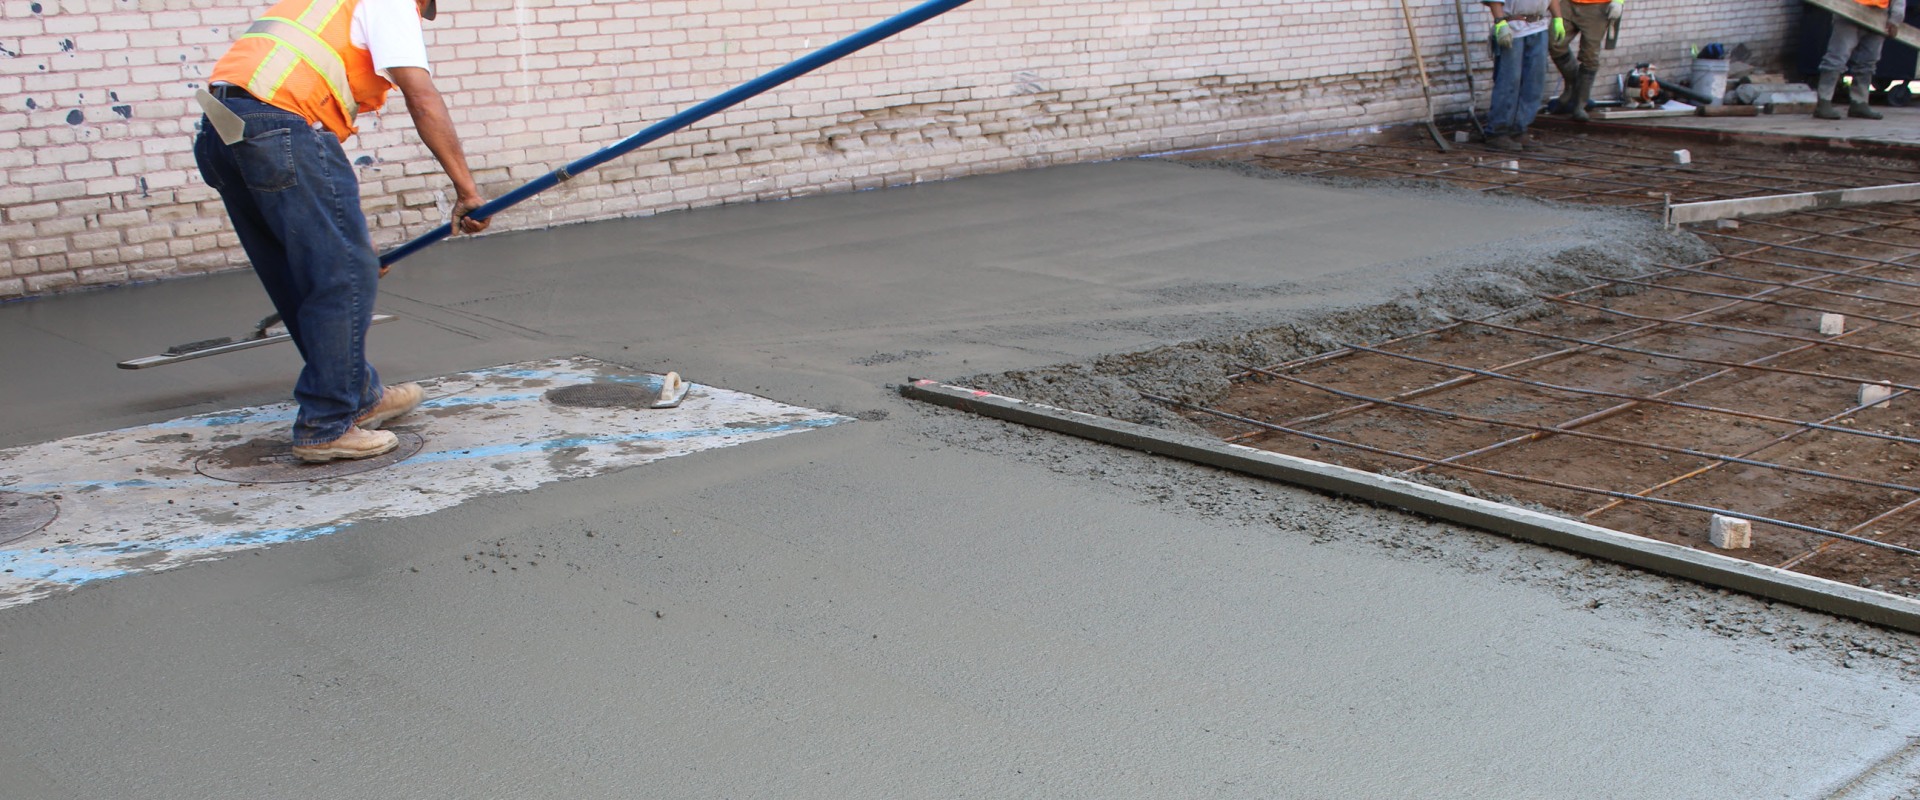 How long does concrete repair take?